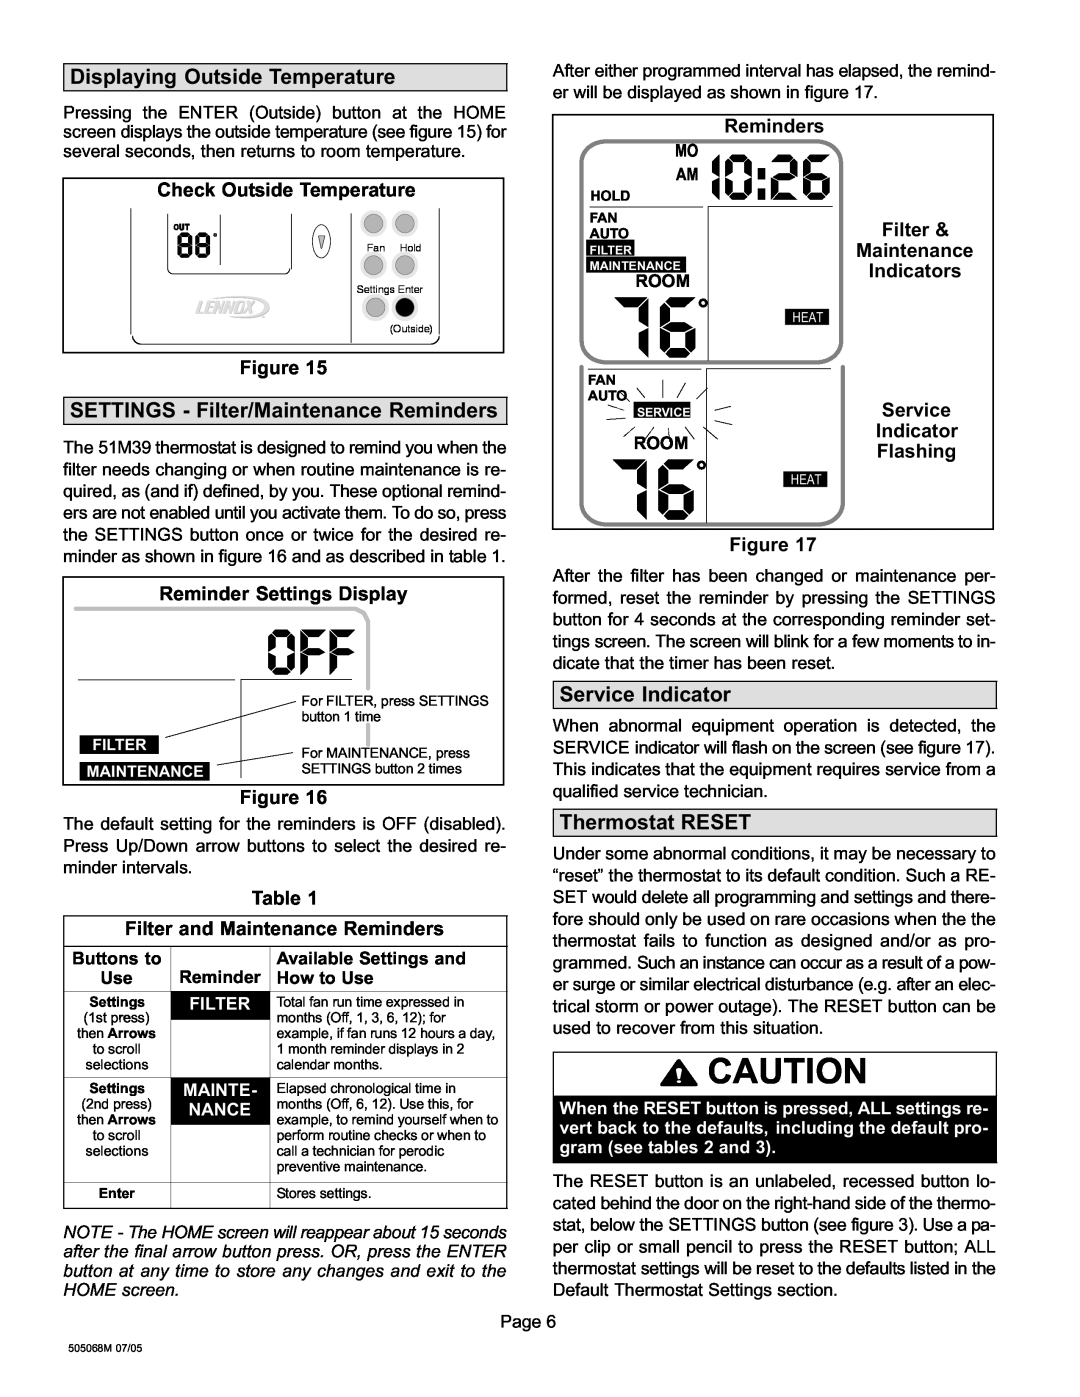 Lennox International Inc 51M37 operation manual Displaying Outside Temperature, I0, SETTINGS − Filter/Maintenance Reminders 